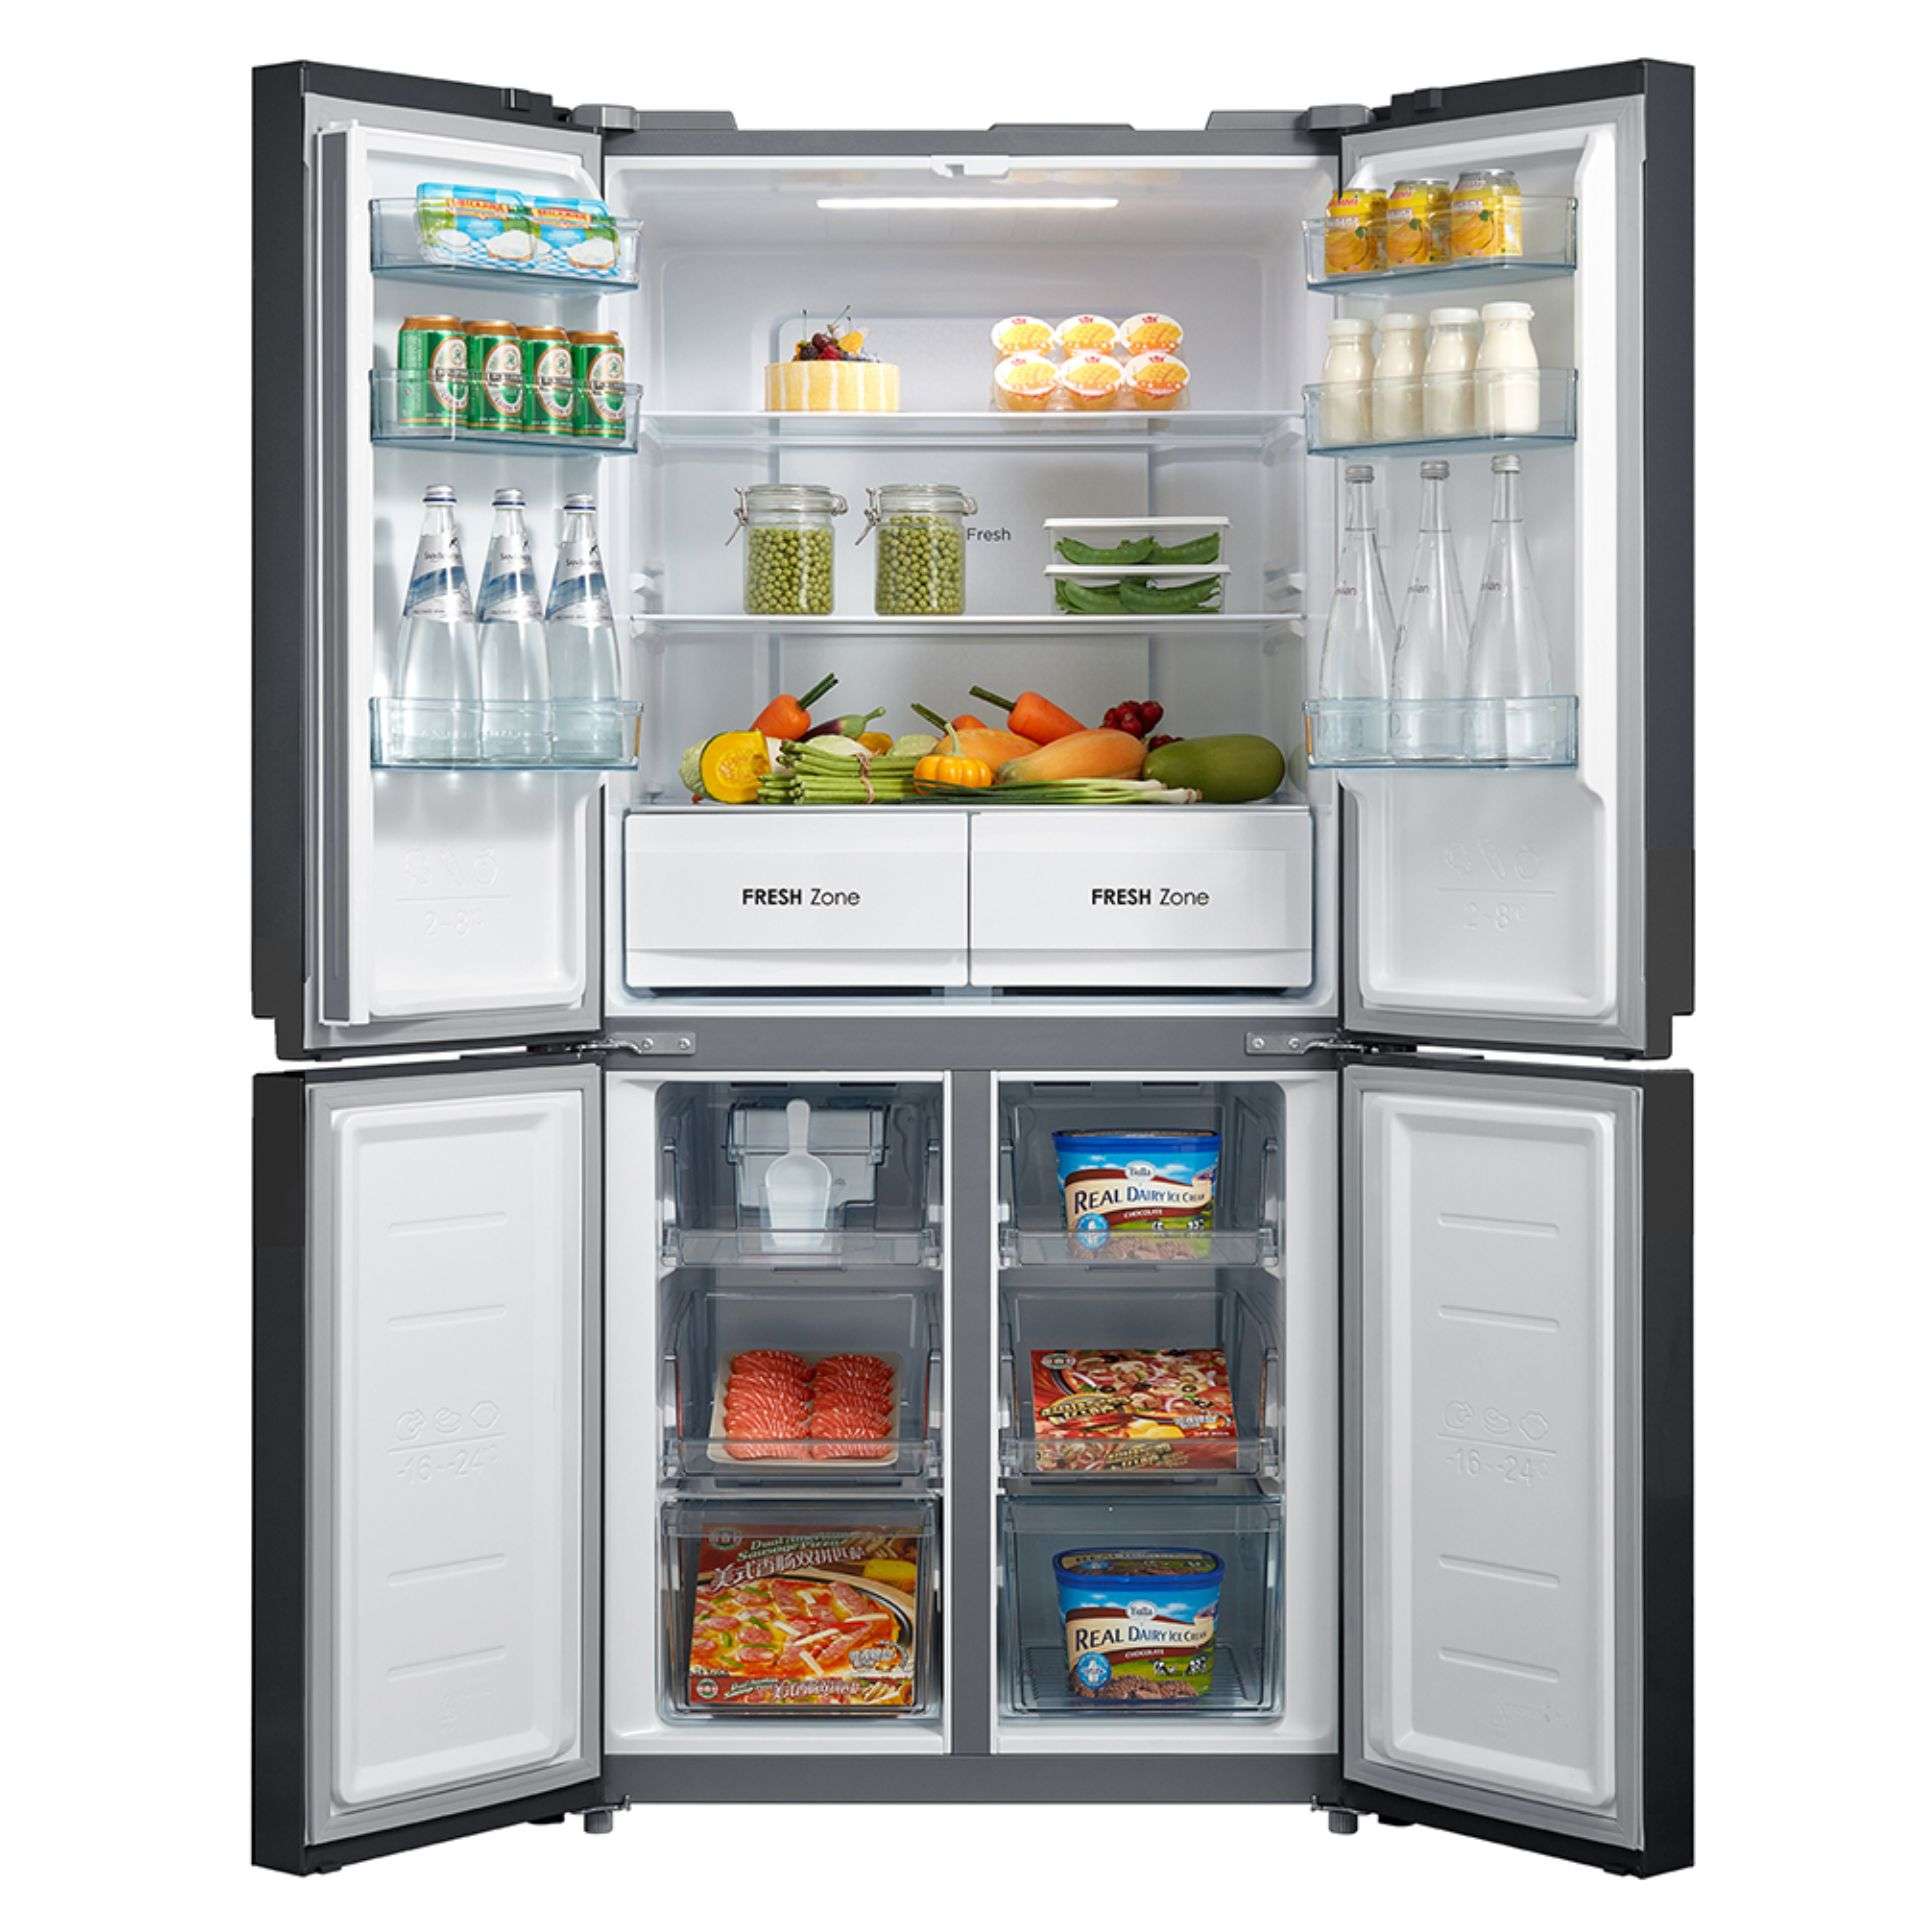 Buy Midea 544 L French Door Refrigerator online Midea India